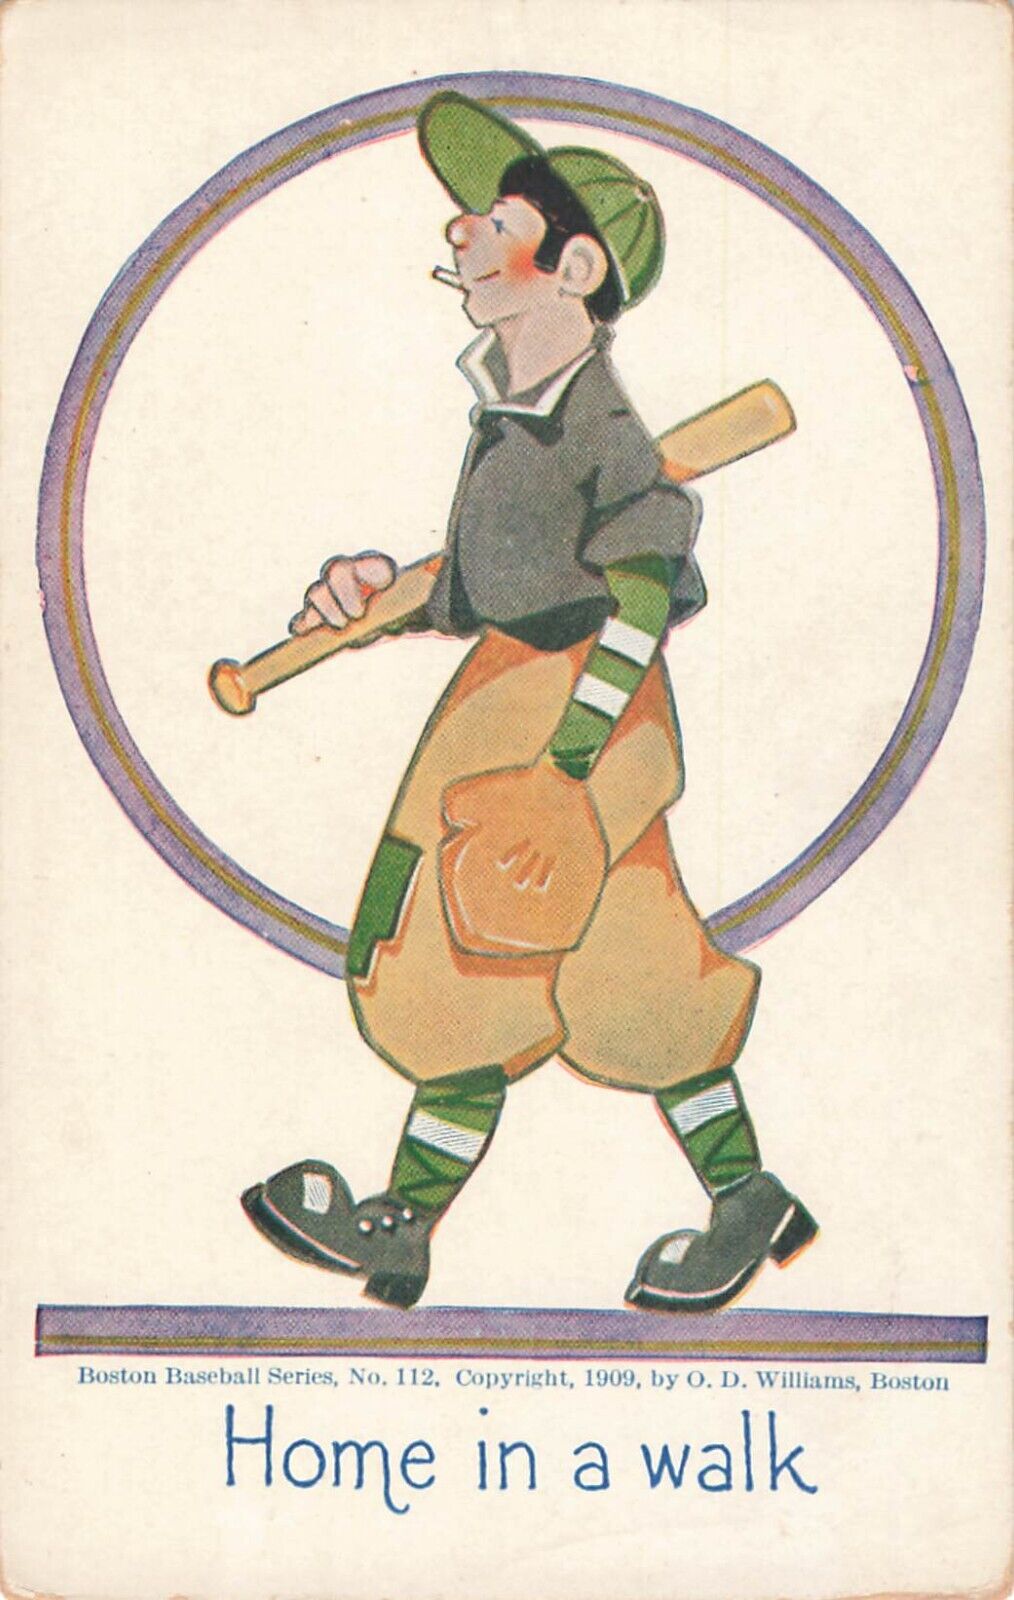 1909 Boston Baseball Series OD Williams 112 Home in a Walk Postcard 5.5